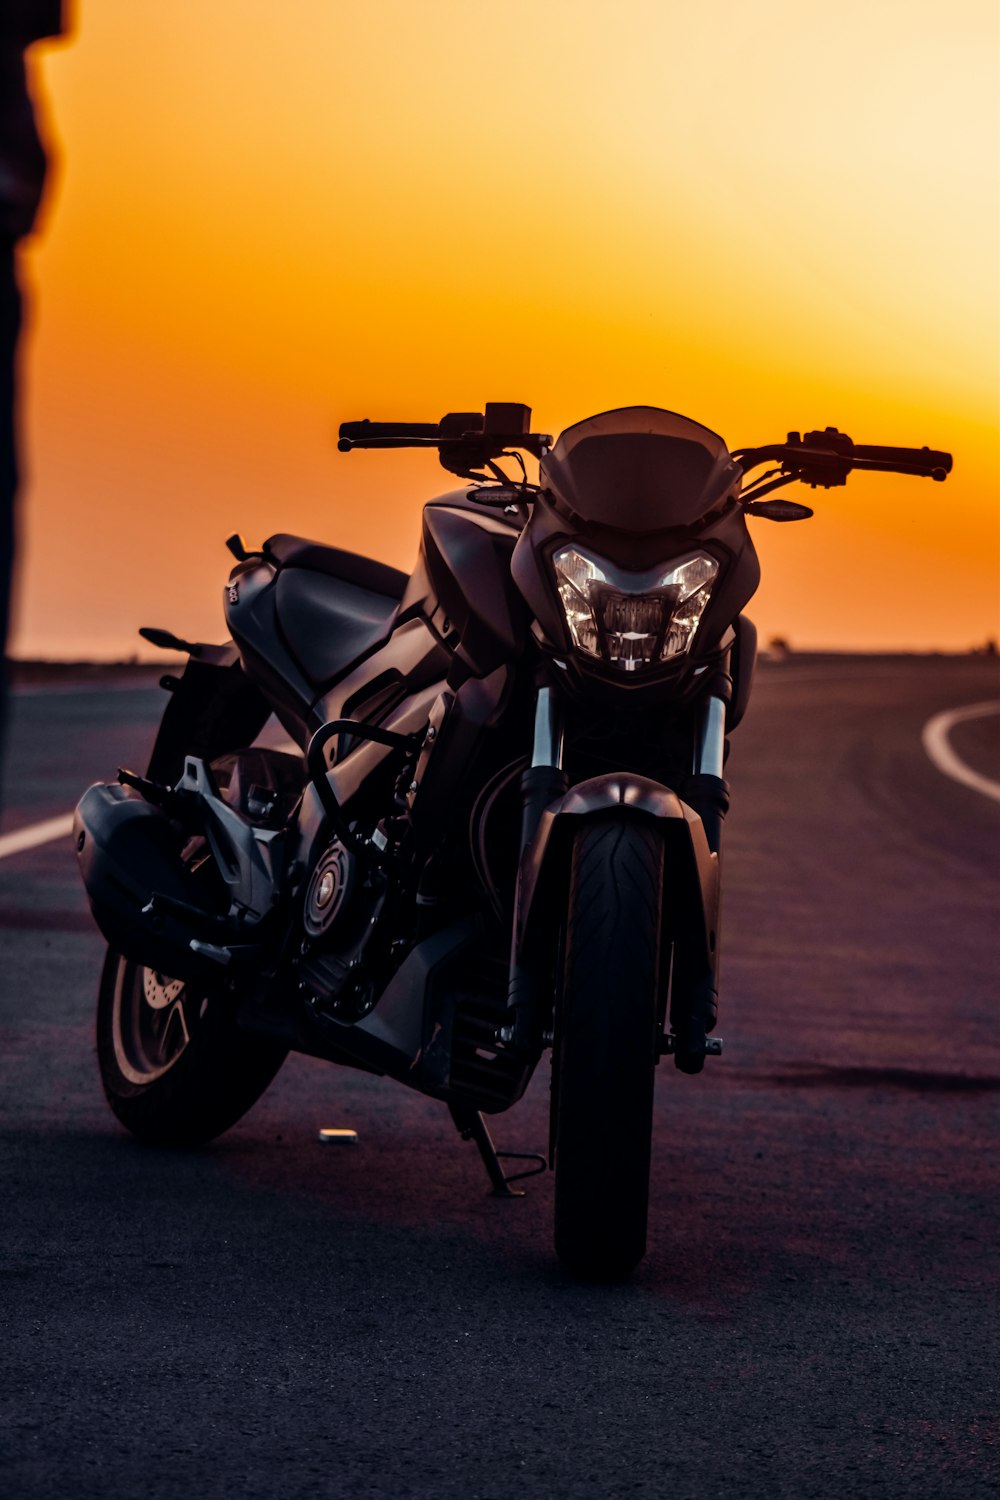 black motorcycle on gray asphalt road during sunset